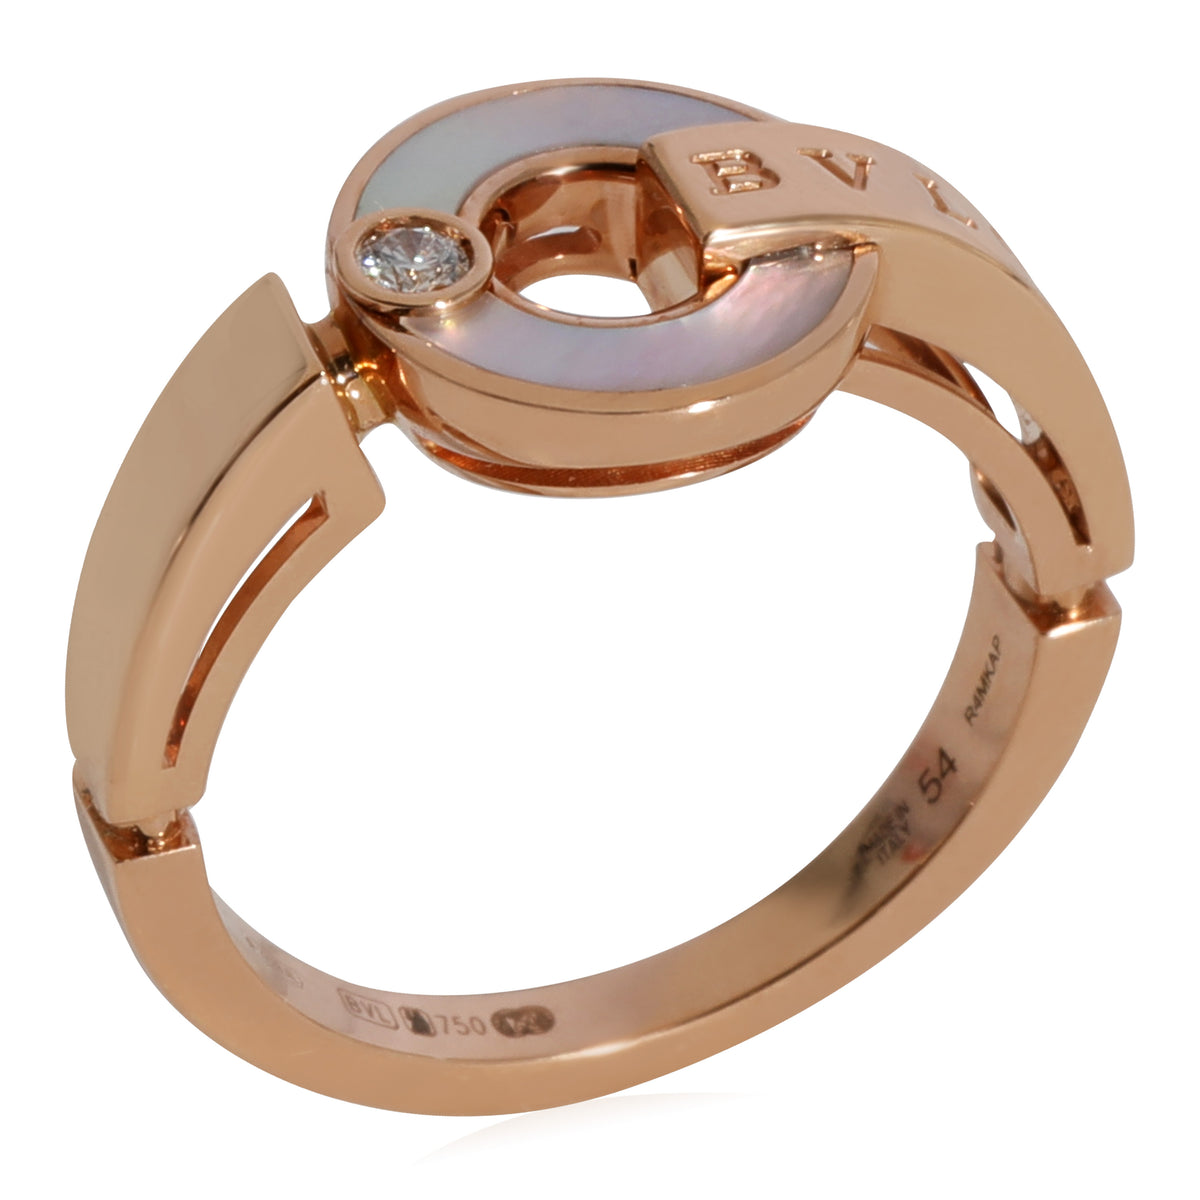 Bvlgari Mother Of Pearl Diamond Ring in 18k Rose Gold 0.04 ctw